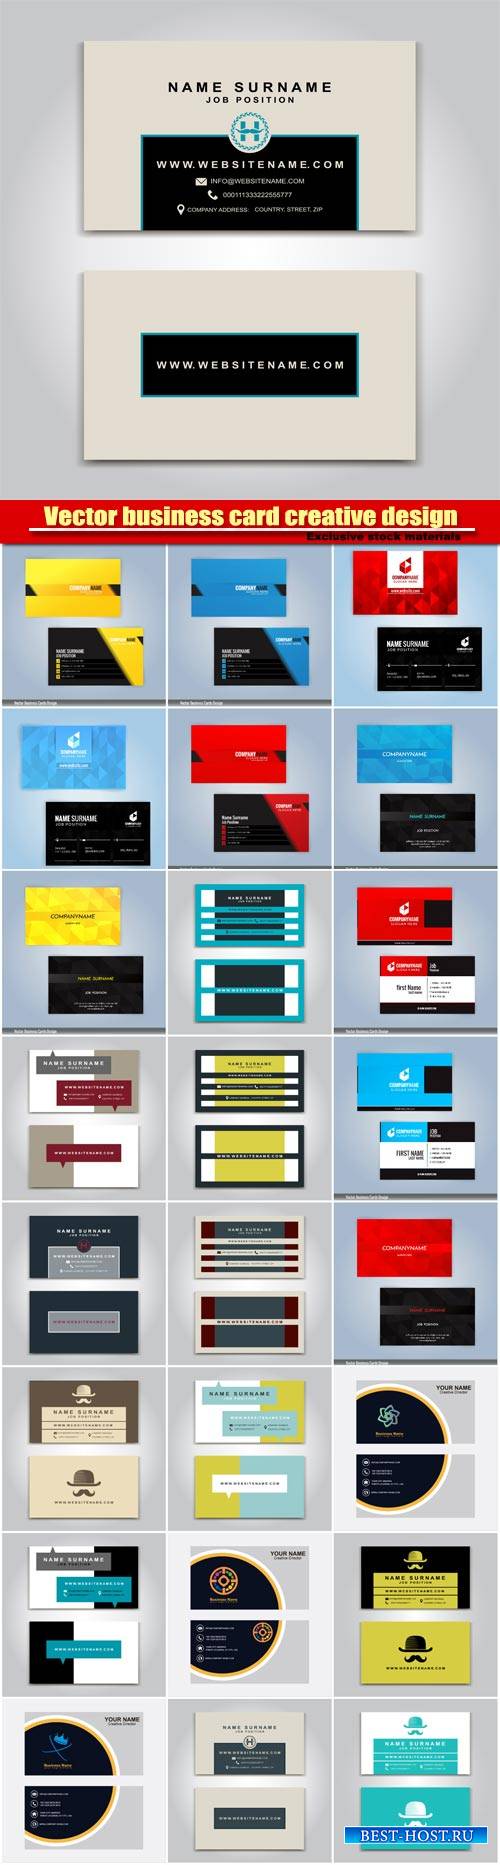 Vector business card creative design